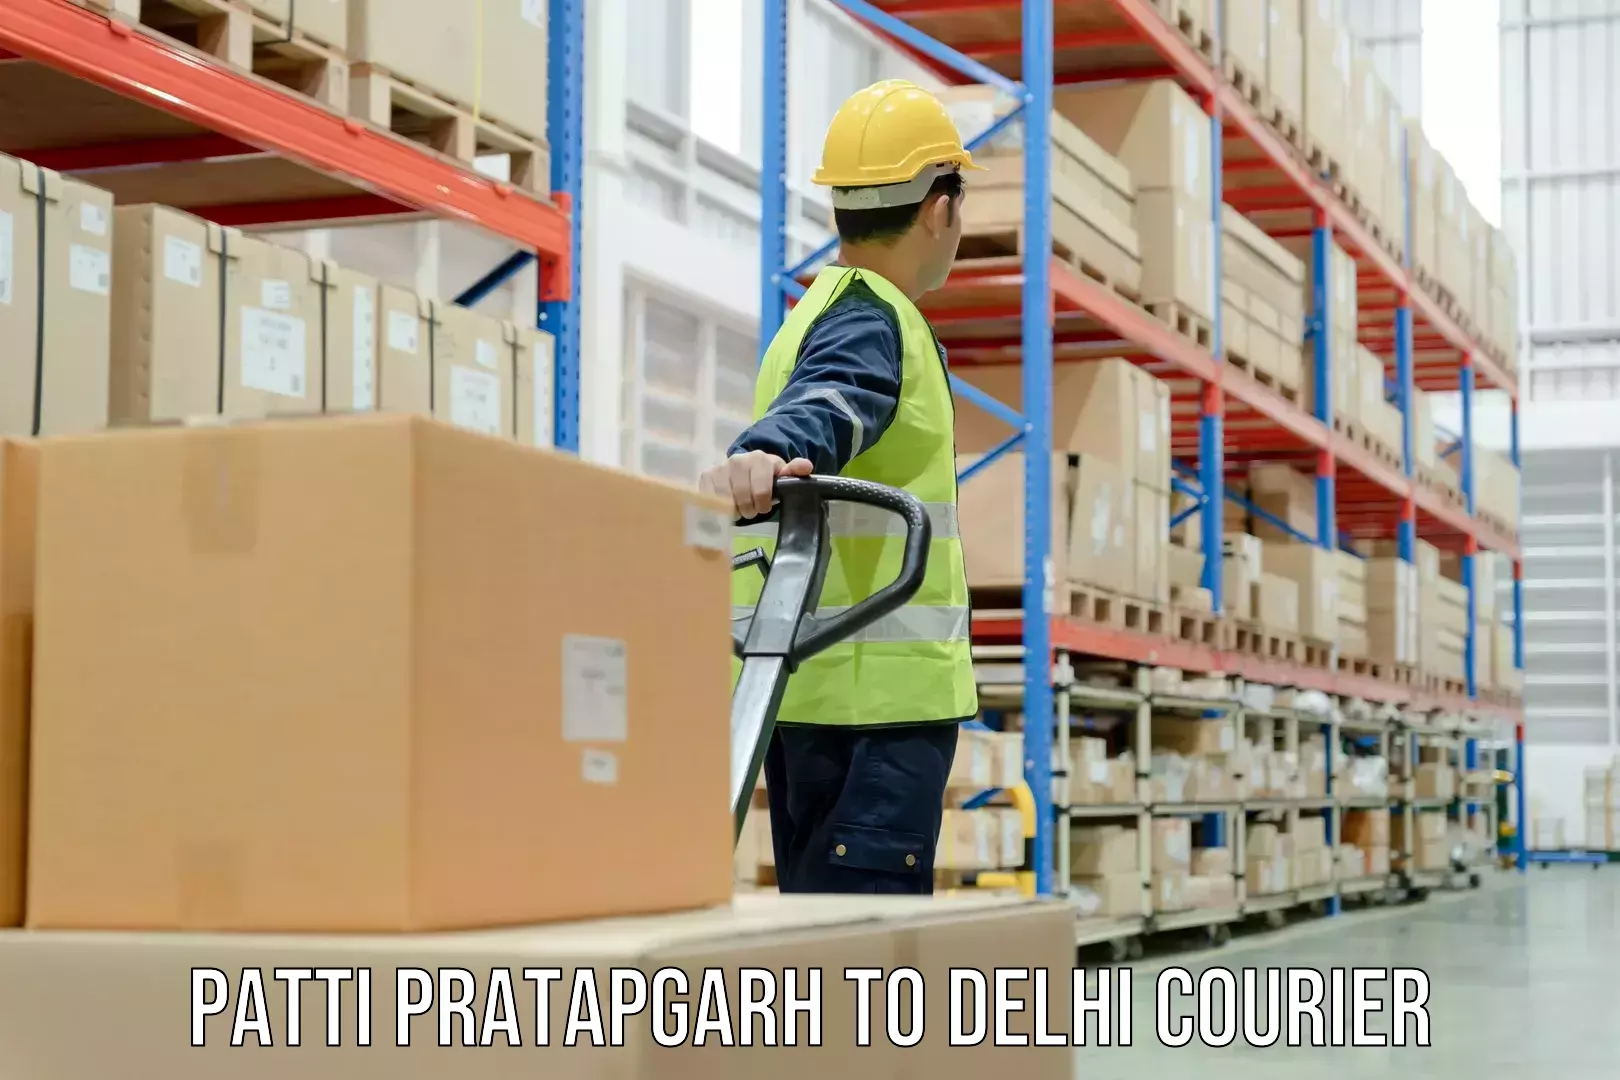 E-commerce fulfillment Patti Pratapgarh to University of Delhi